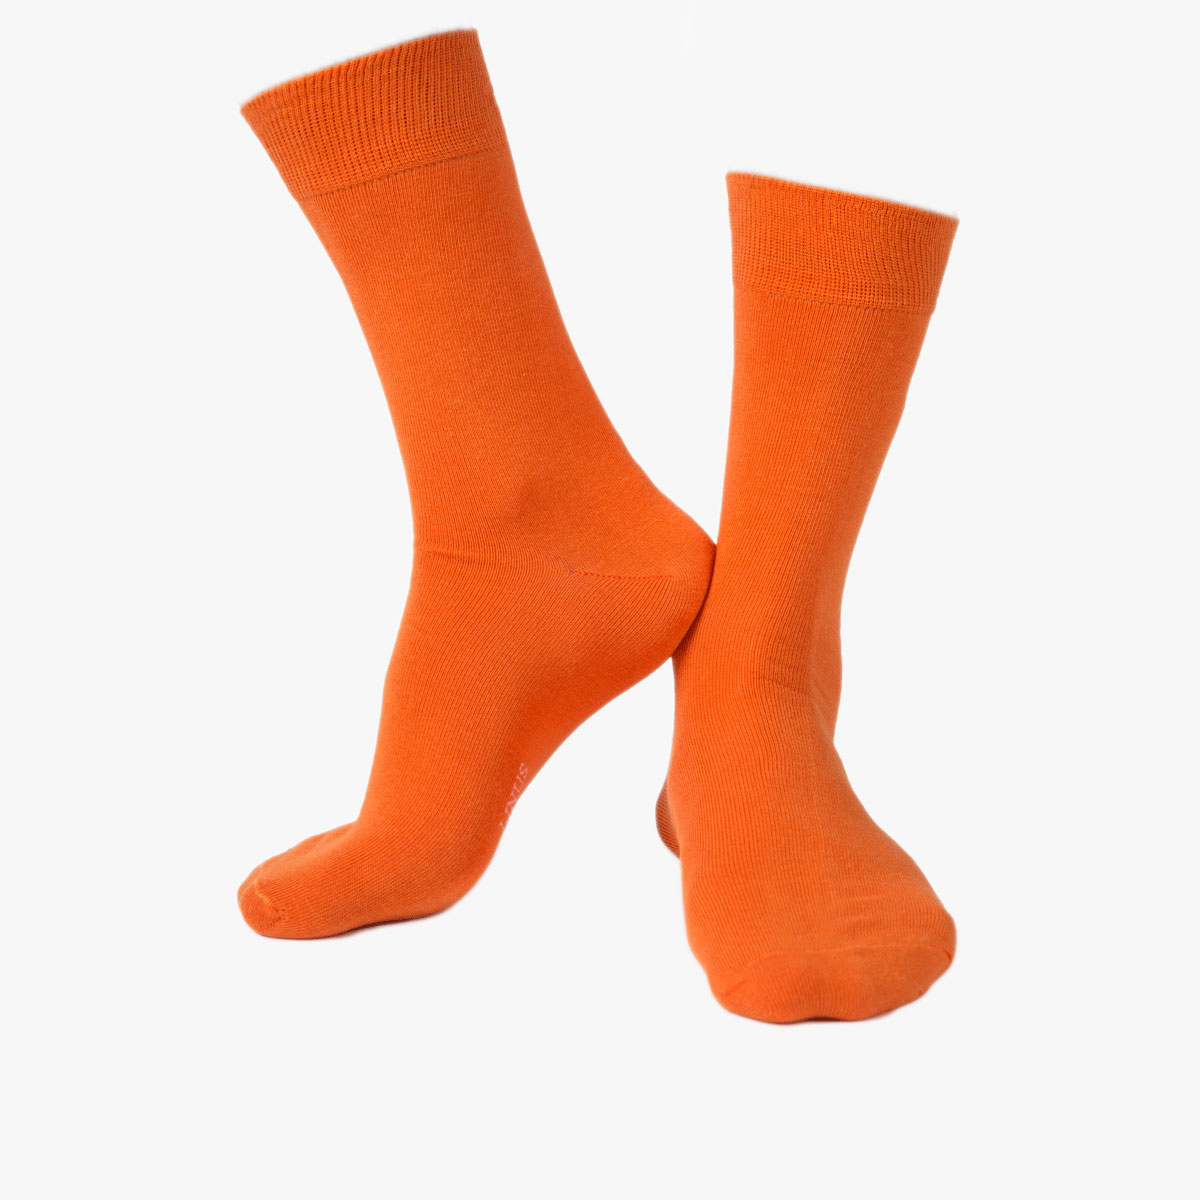 Socken in uni orange